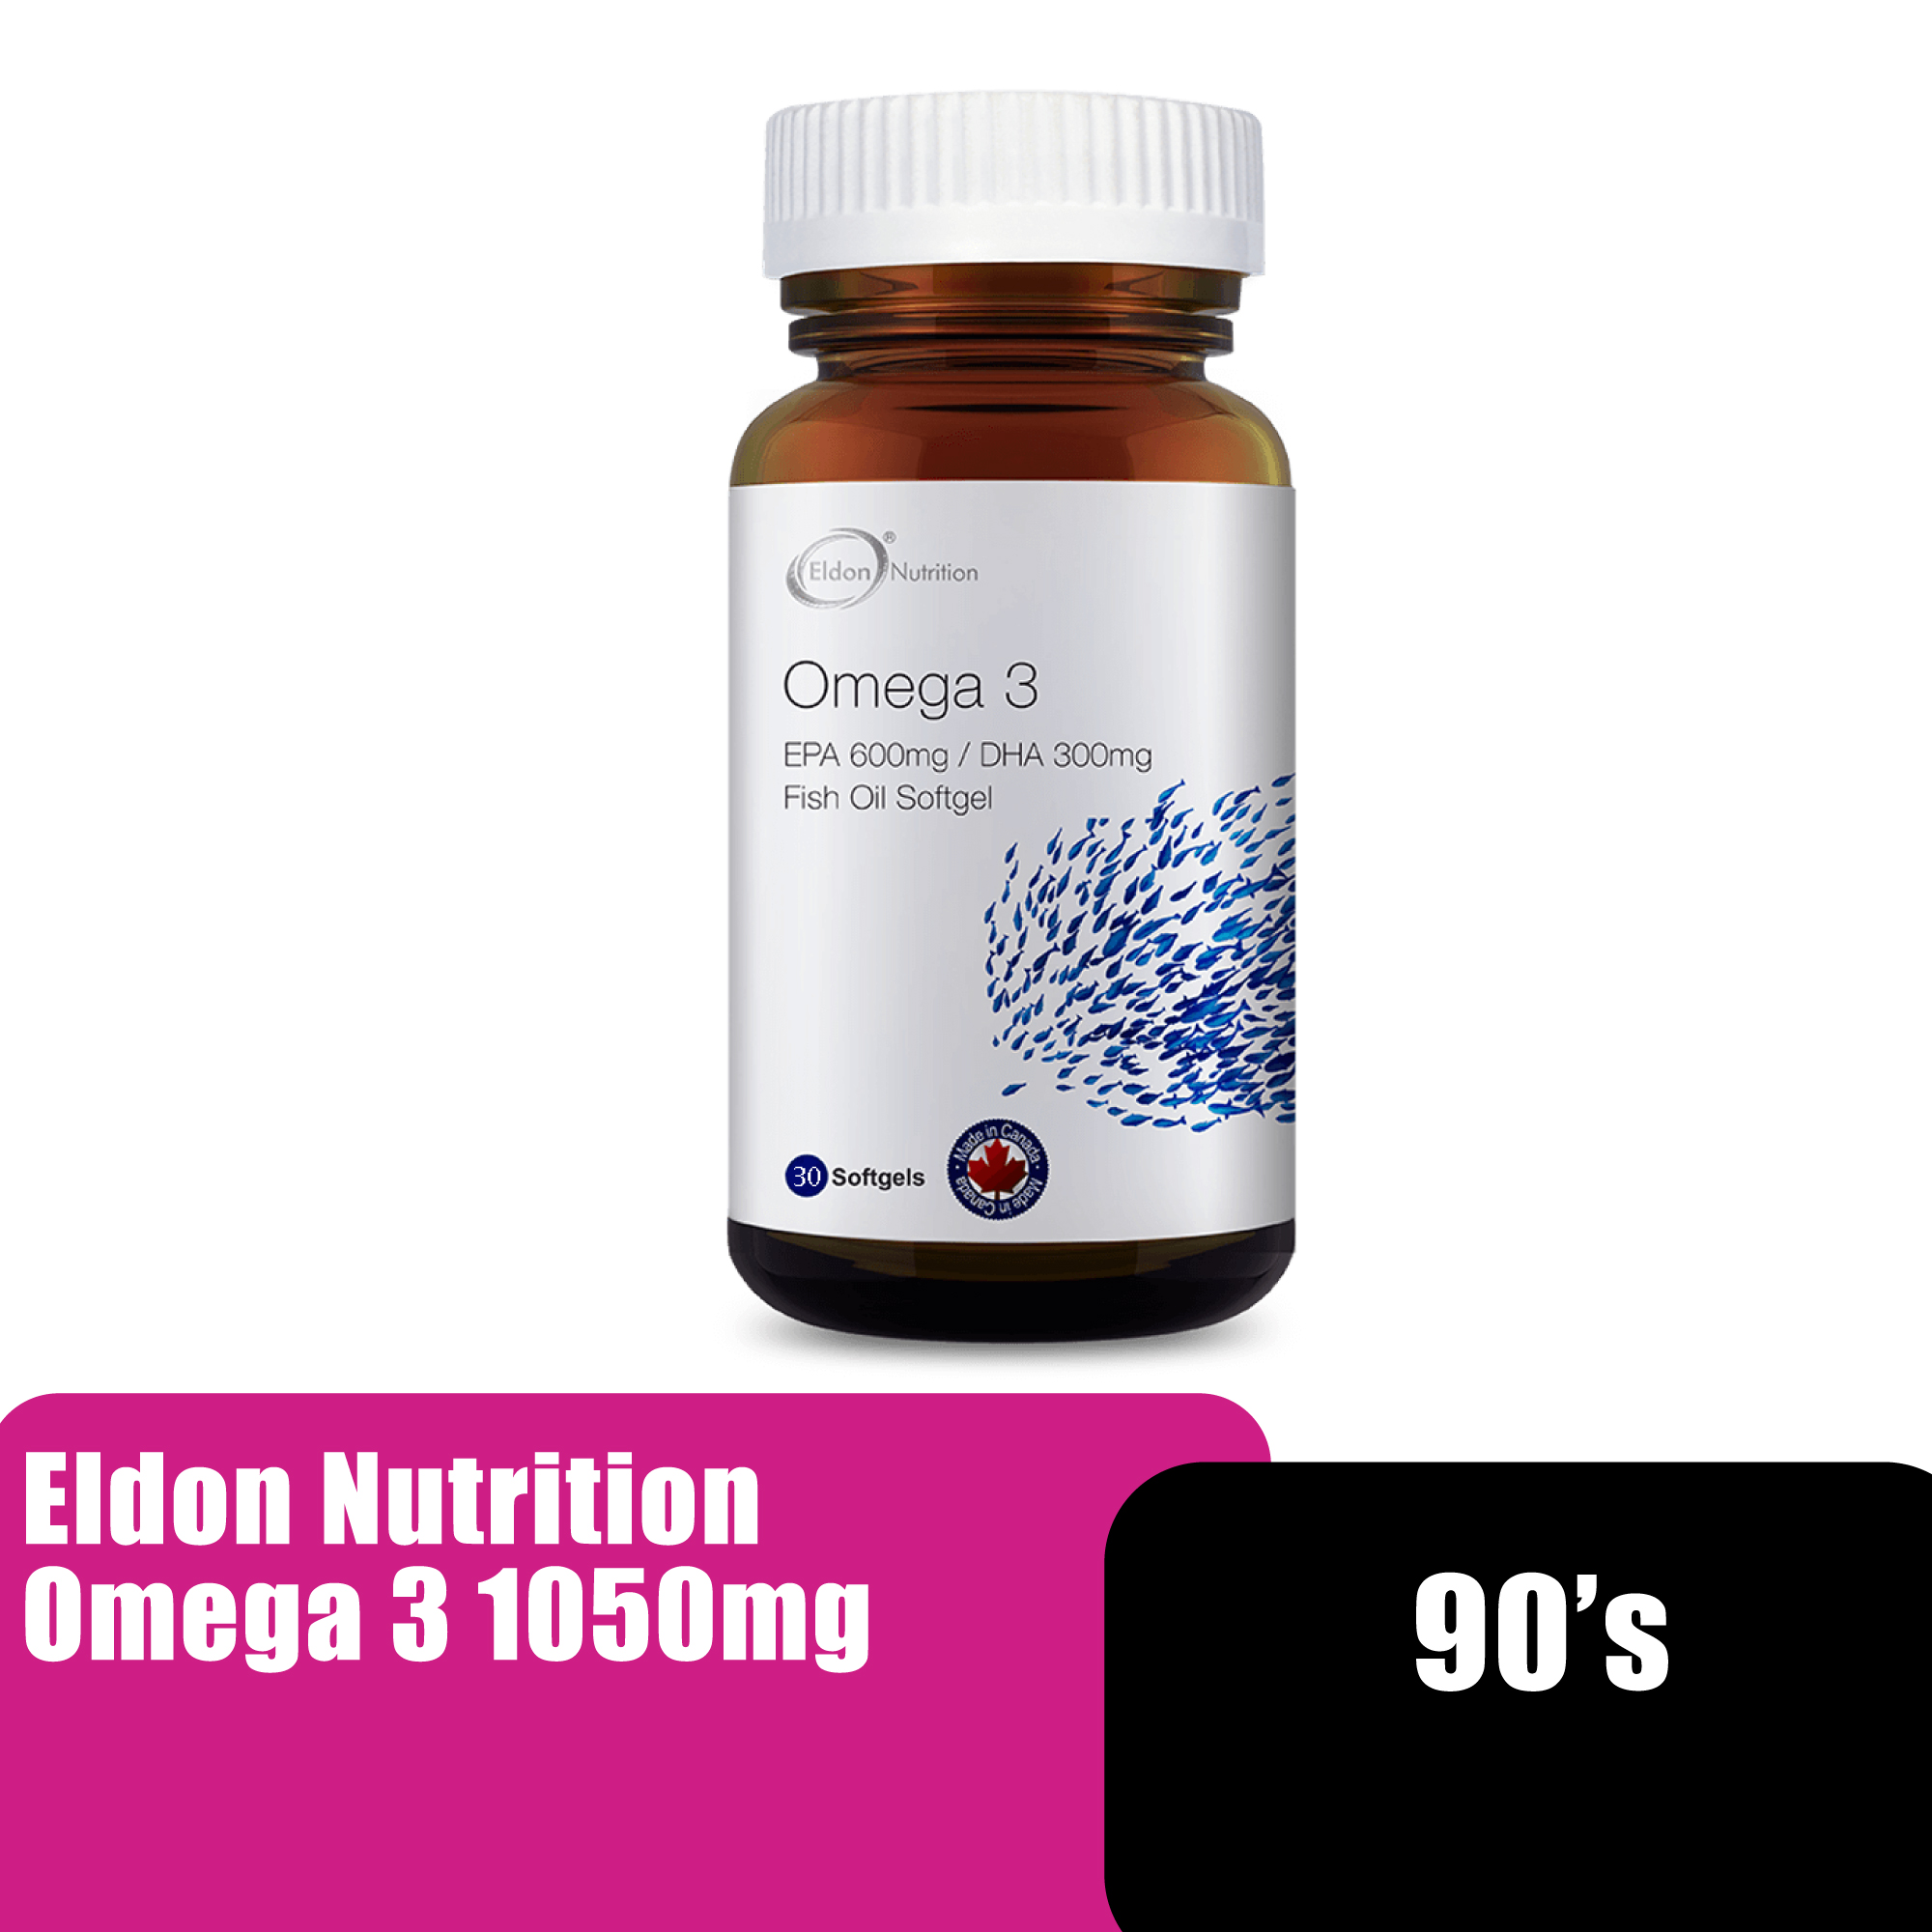 ELDON Nutrition Omega 3 Fish Oil Supplement, Memory Booster Brain Supplement, Heart Supplement (补脑) (1050mg x 90's)